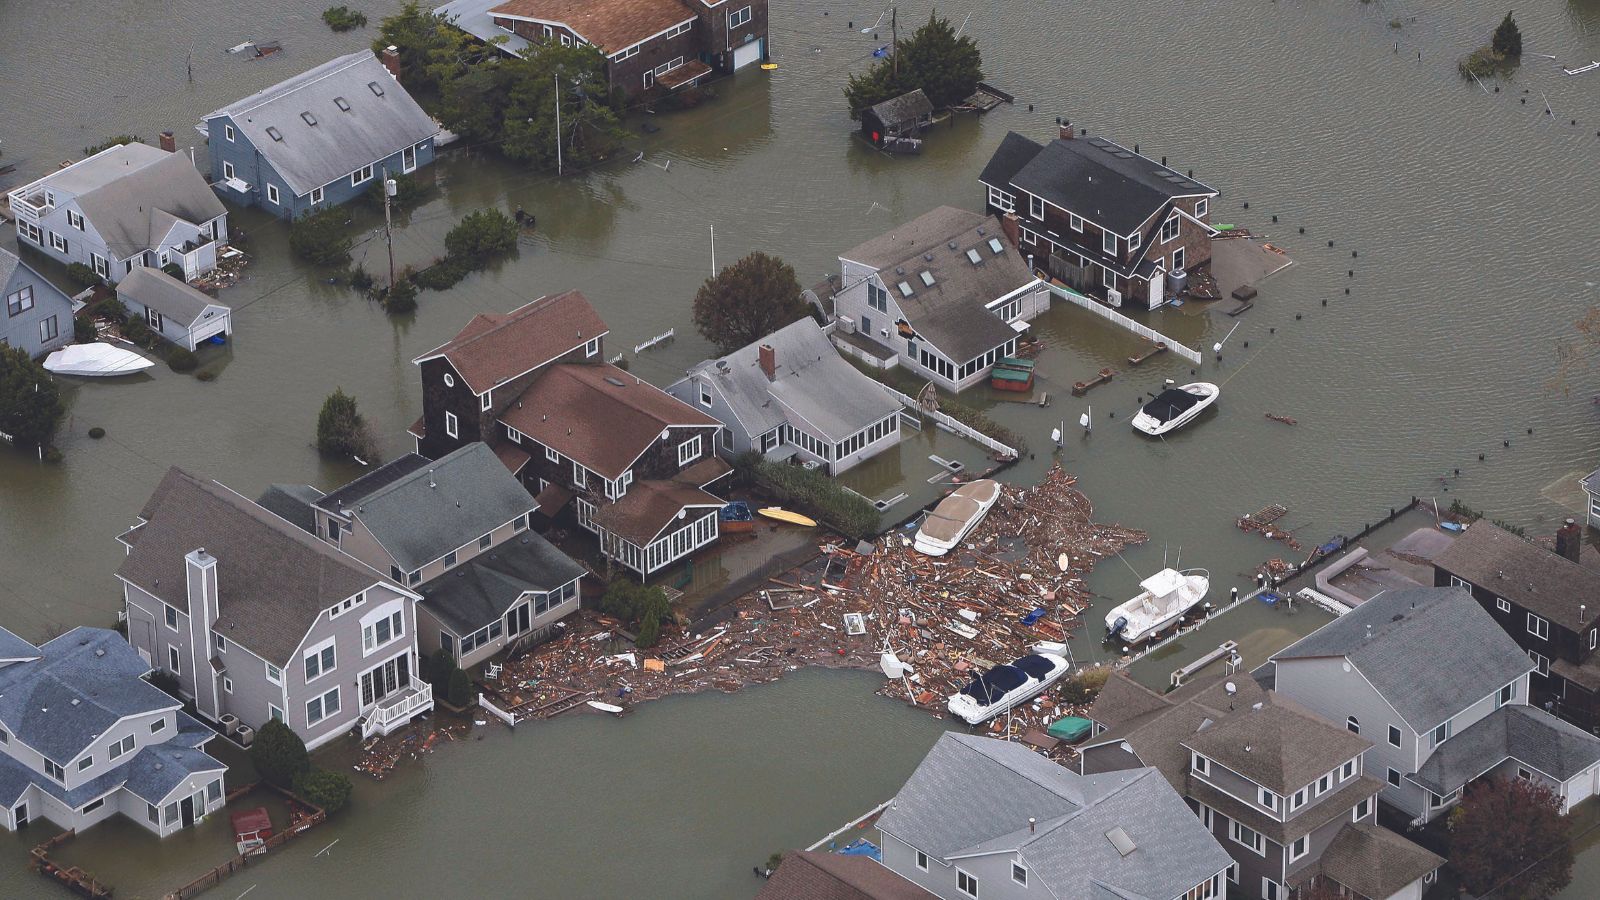 Hurricane Sandy damage in Seaside, NJ